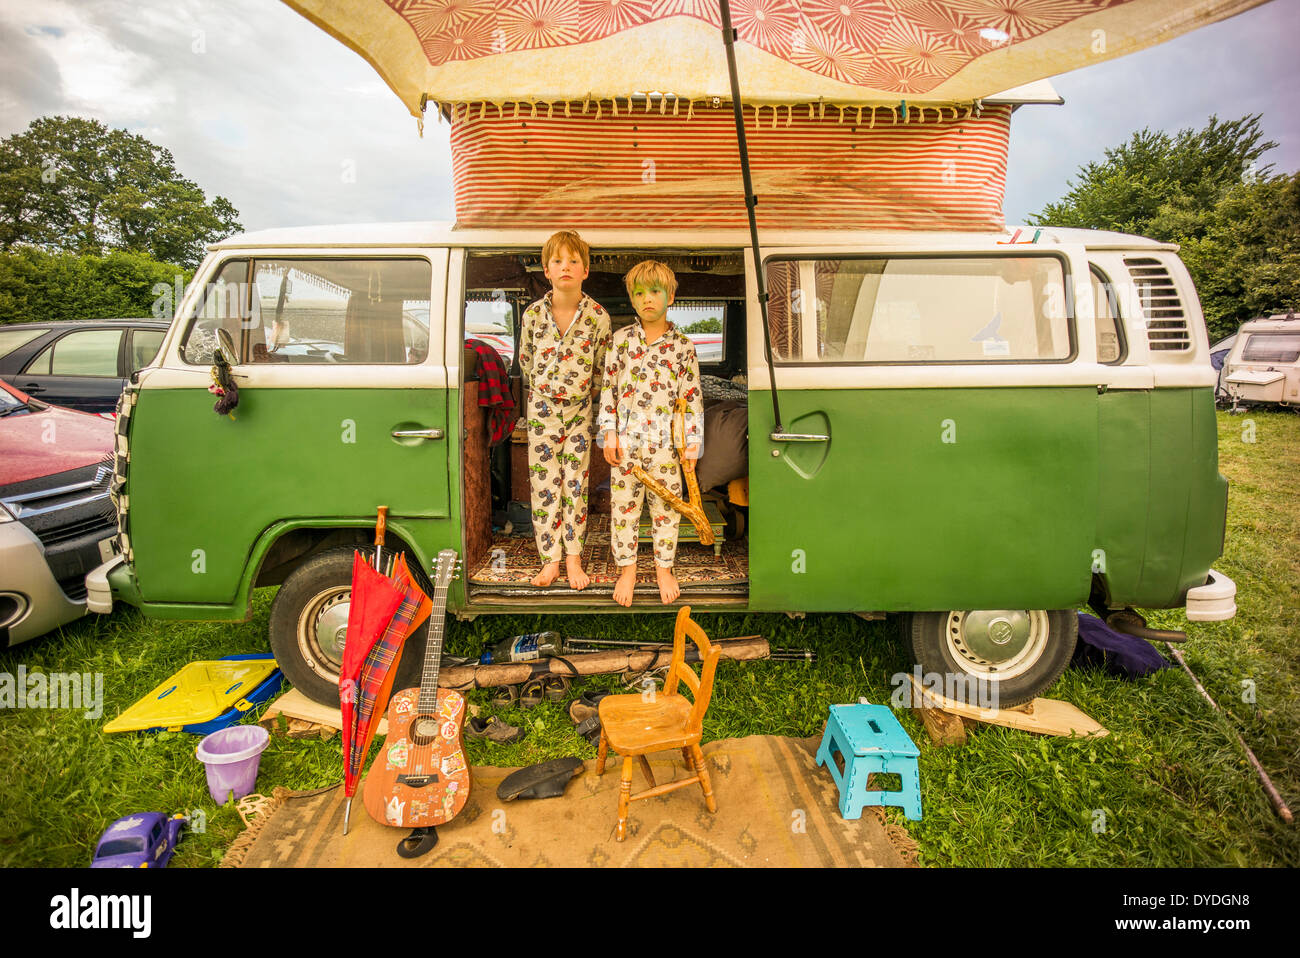 Two grumpy boys having fun in a VW camper van at a festival. Stock Photo